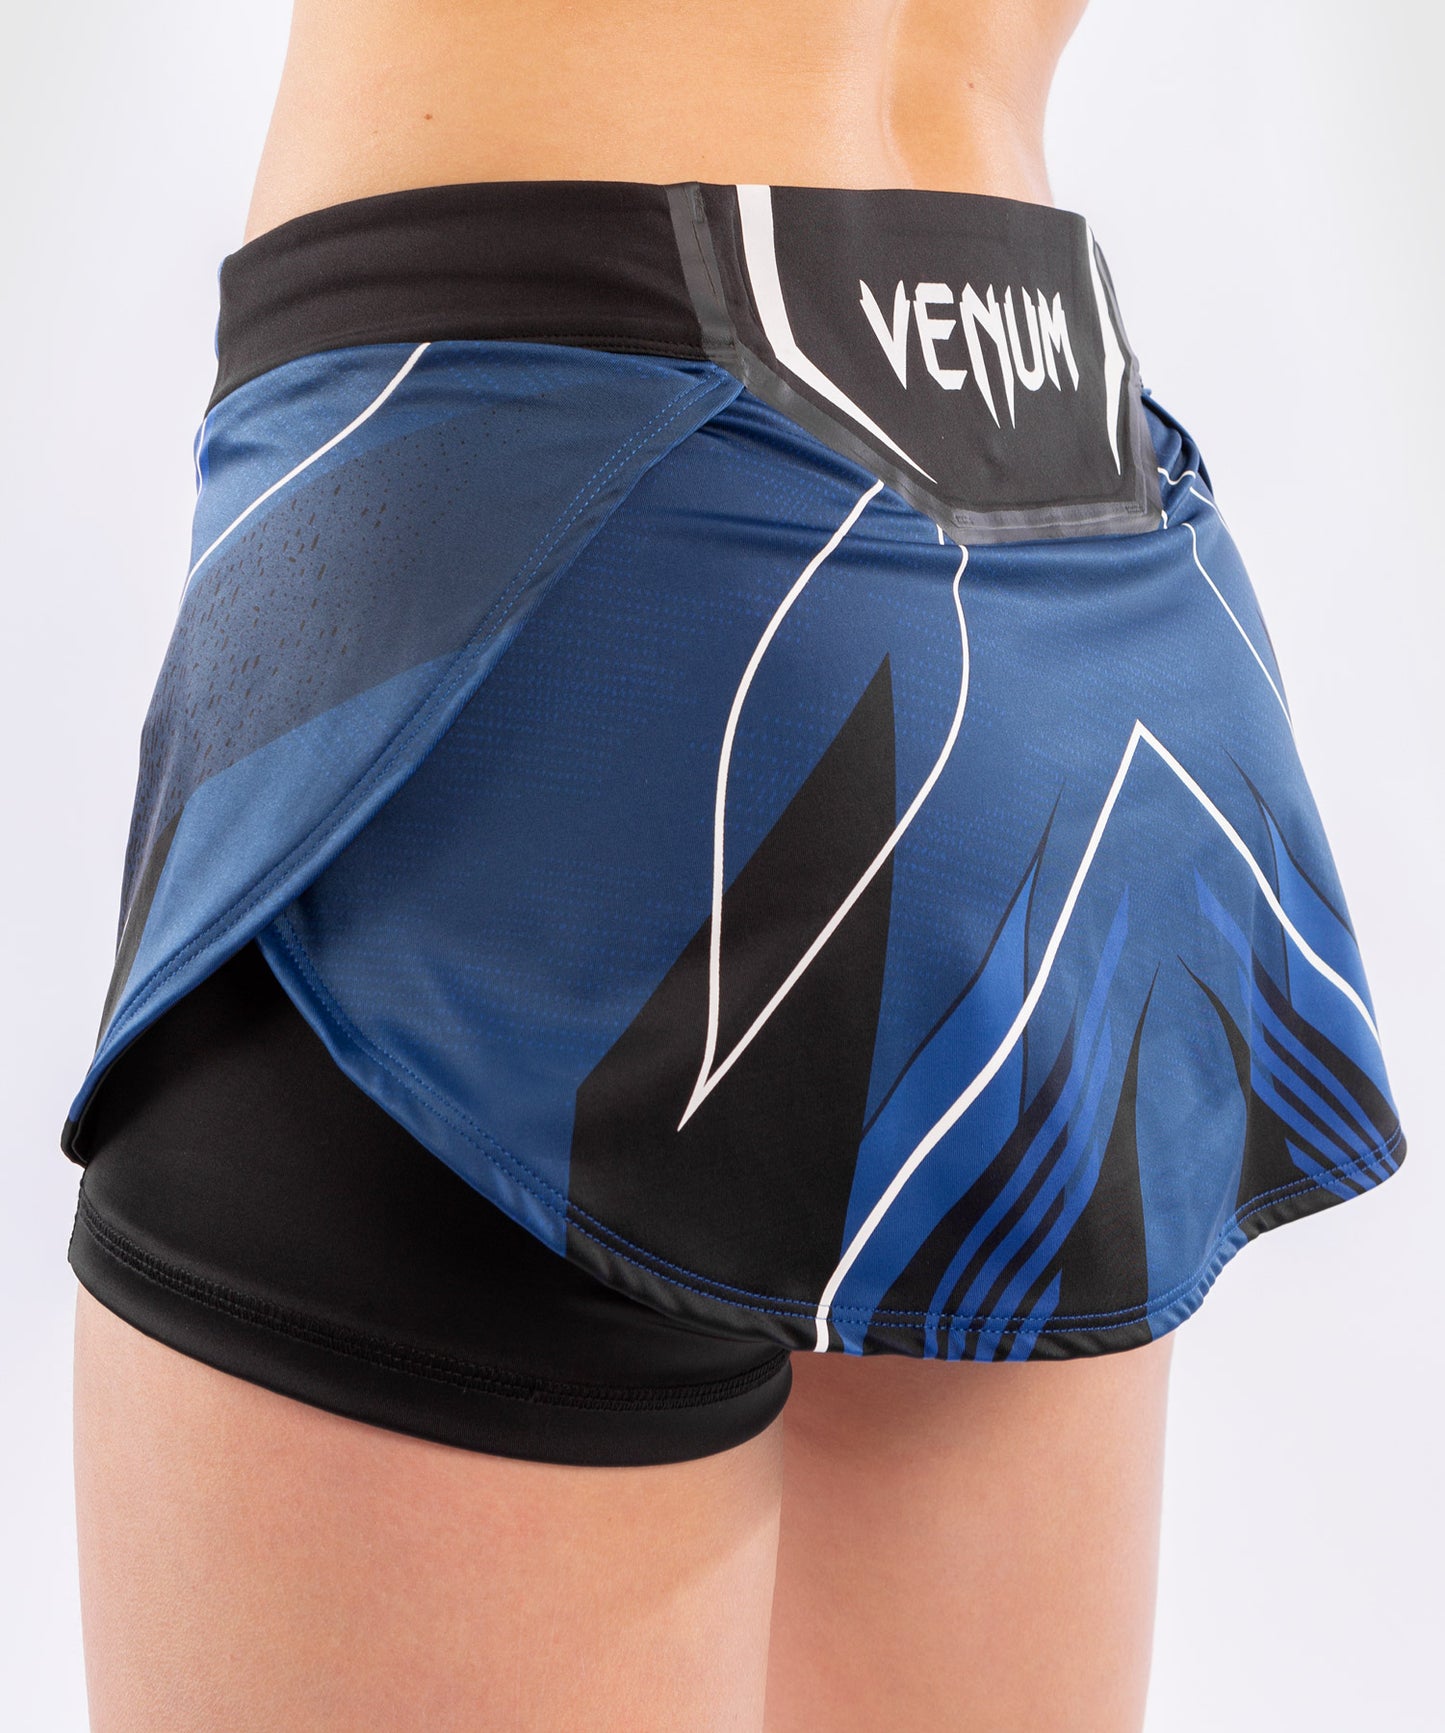 Falda-pantalón Para Mujer UFC Venum Authentic Fight Night - Azul